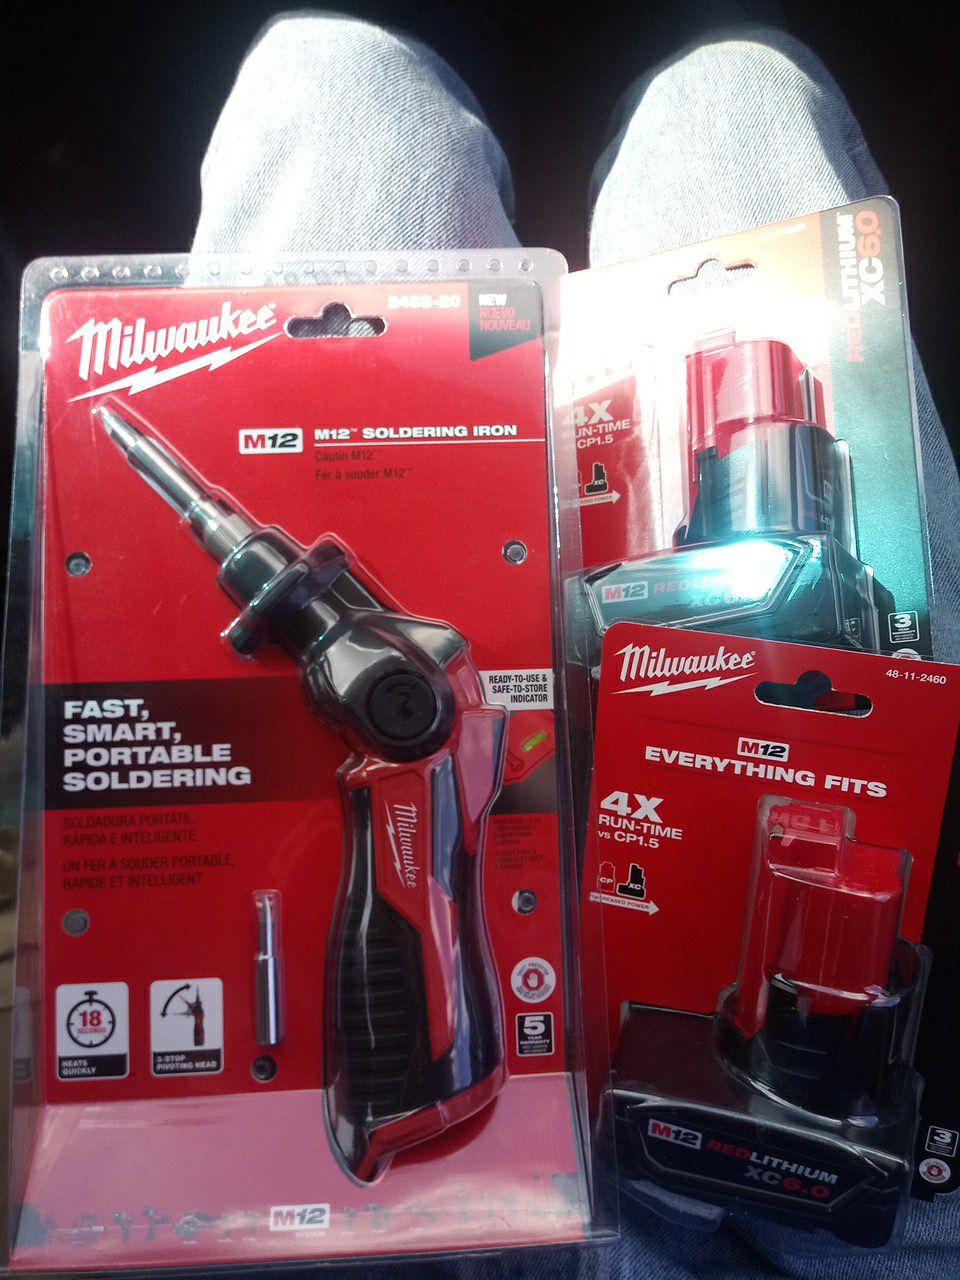 Milwaukee m12 soldering iron and 2 6.0 batteries